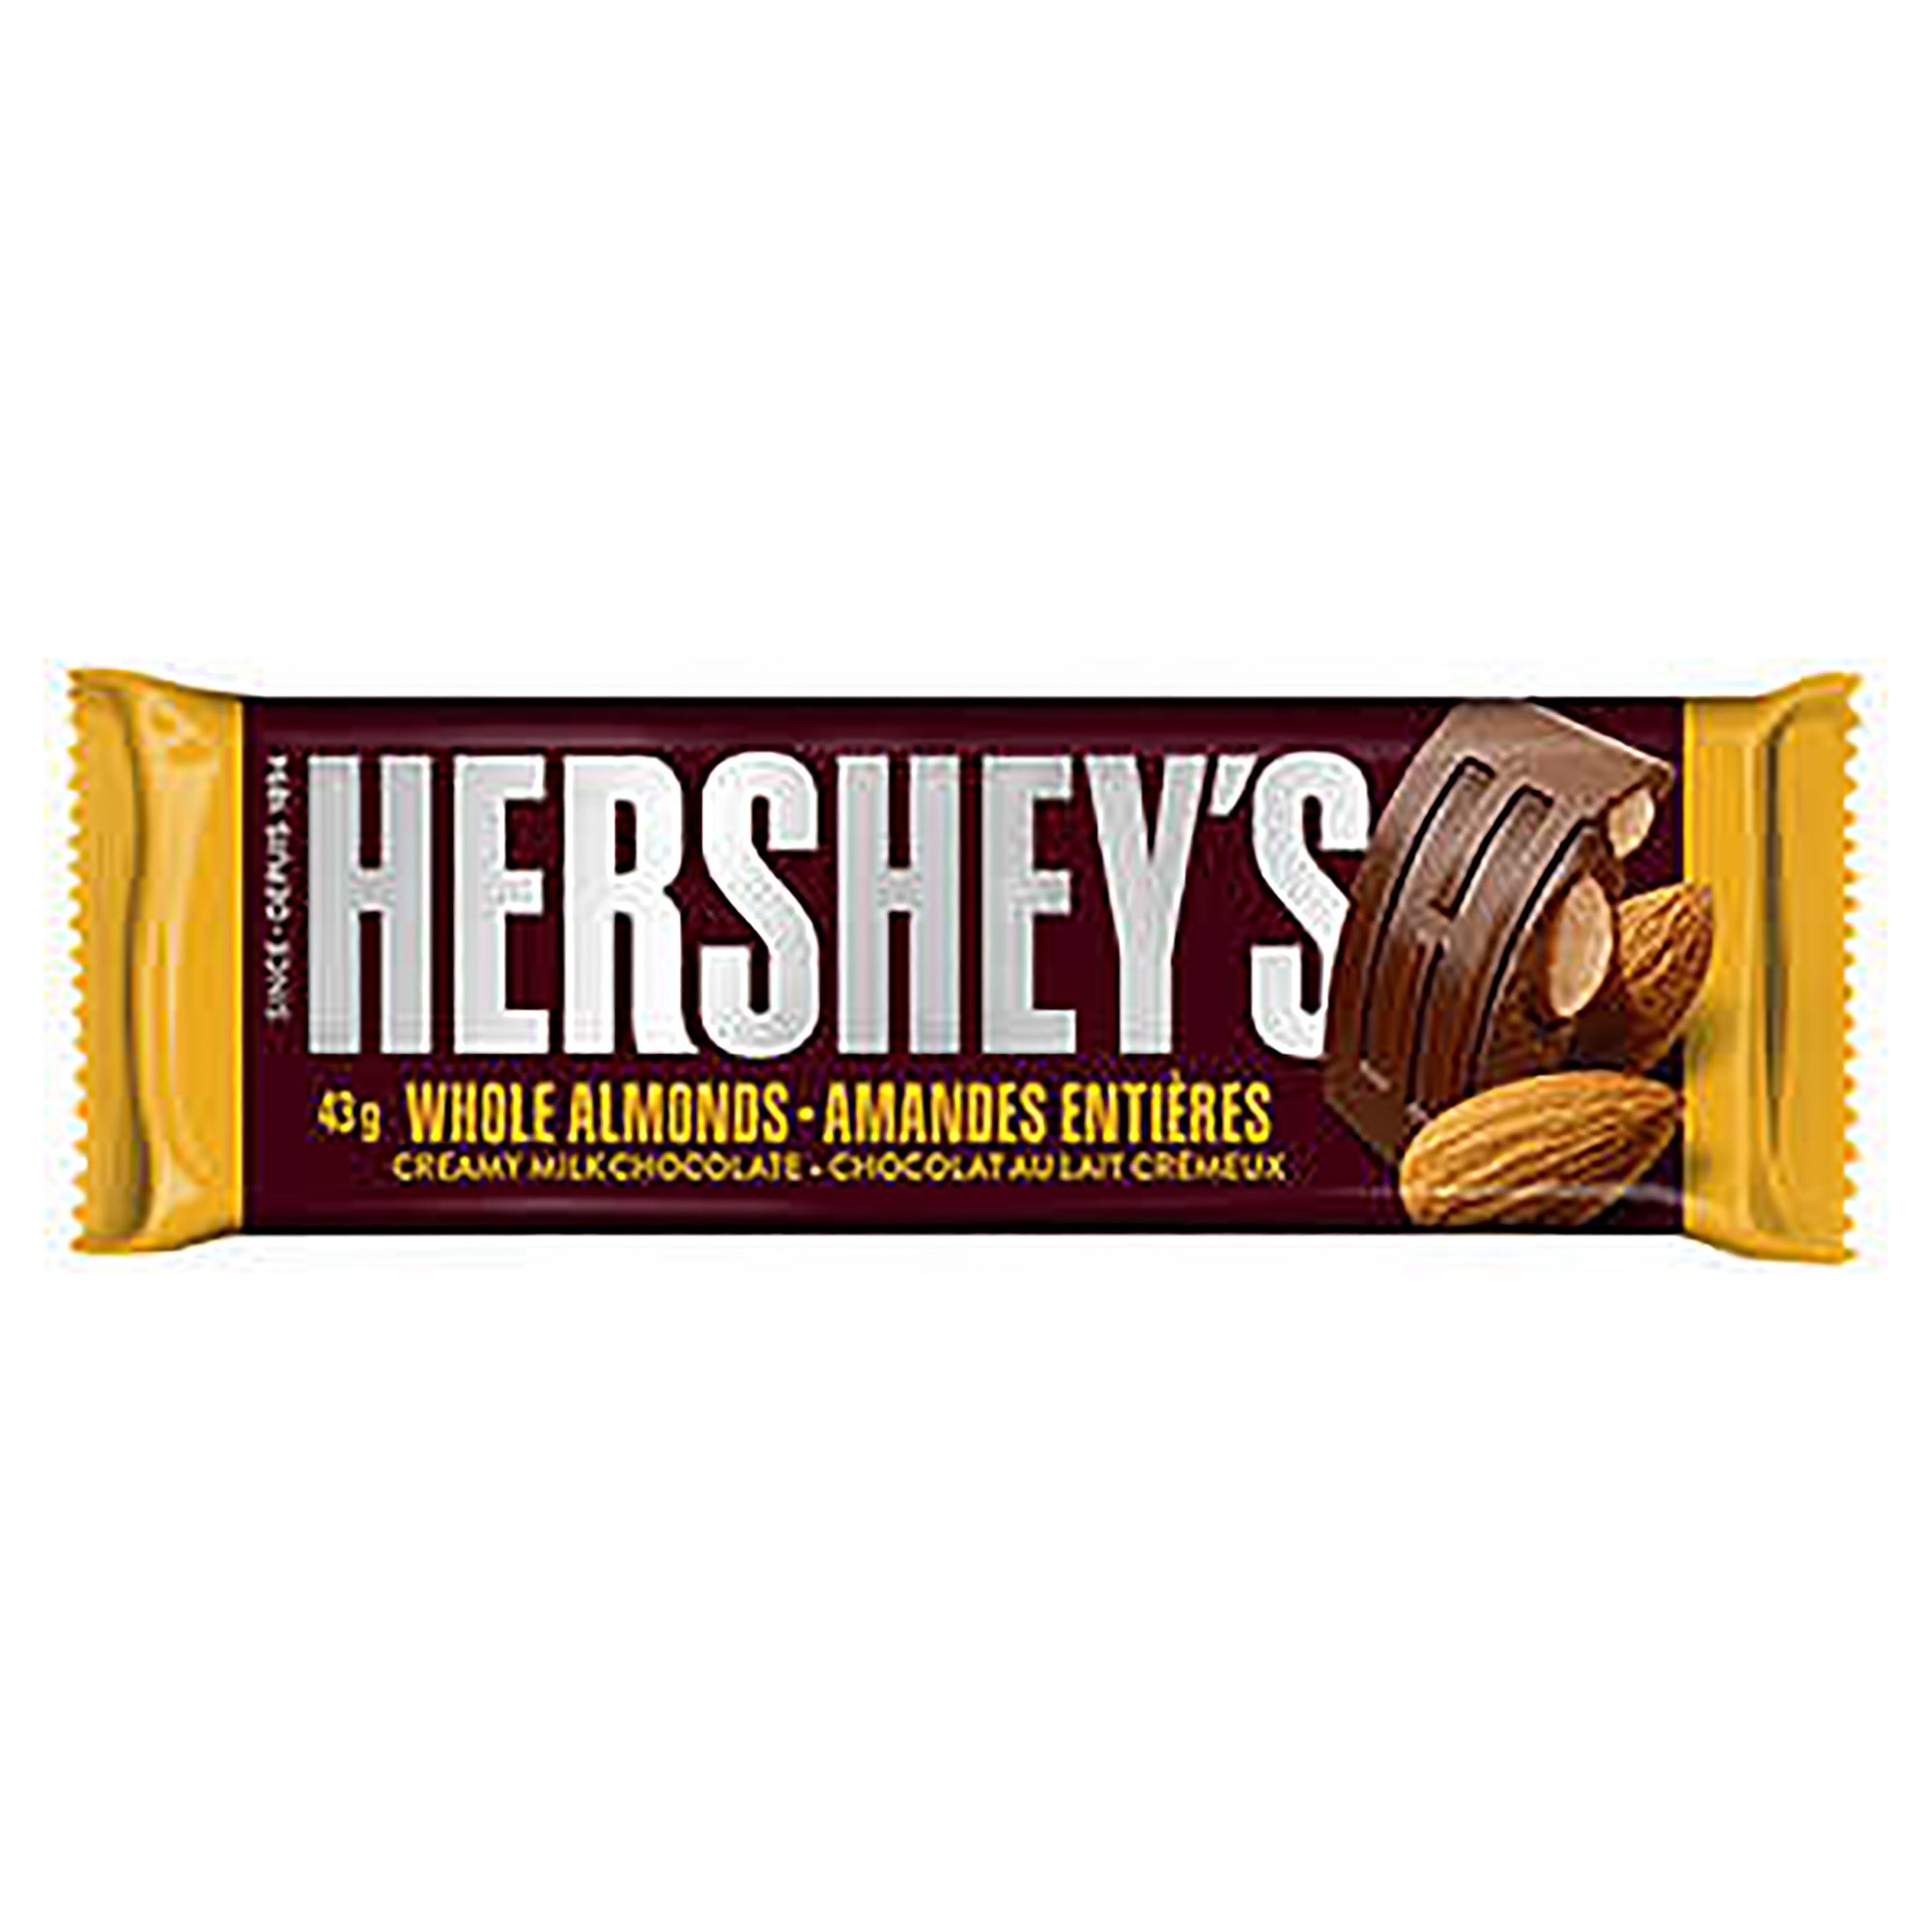 Hershey's Creamy Milk Chocolate - Whole Almonds 43g